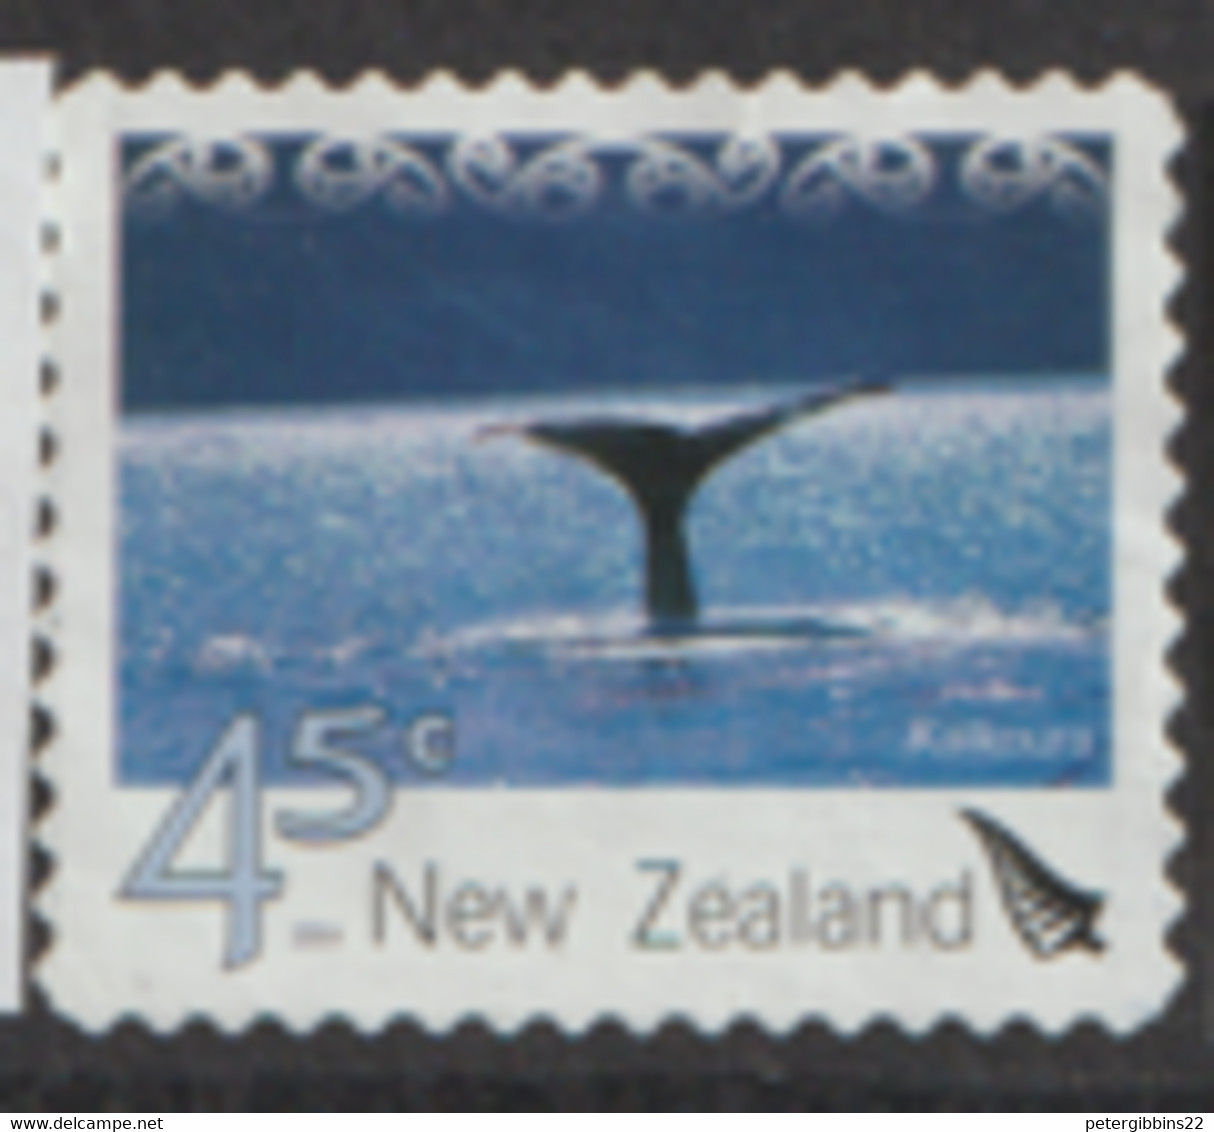 New Zealand  2003   SG  2600  Whale   Fine Used - Oblitérés